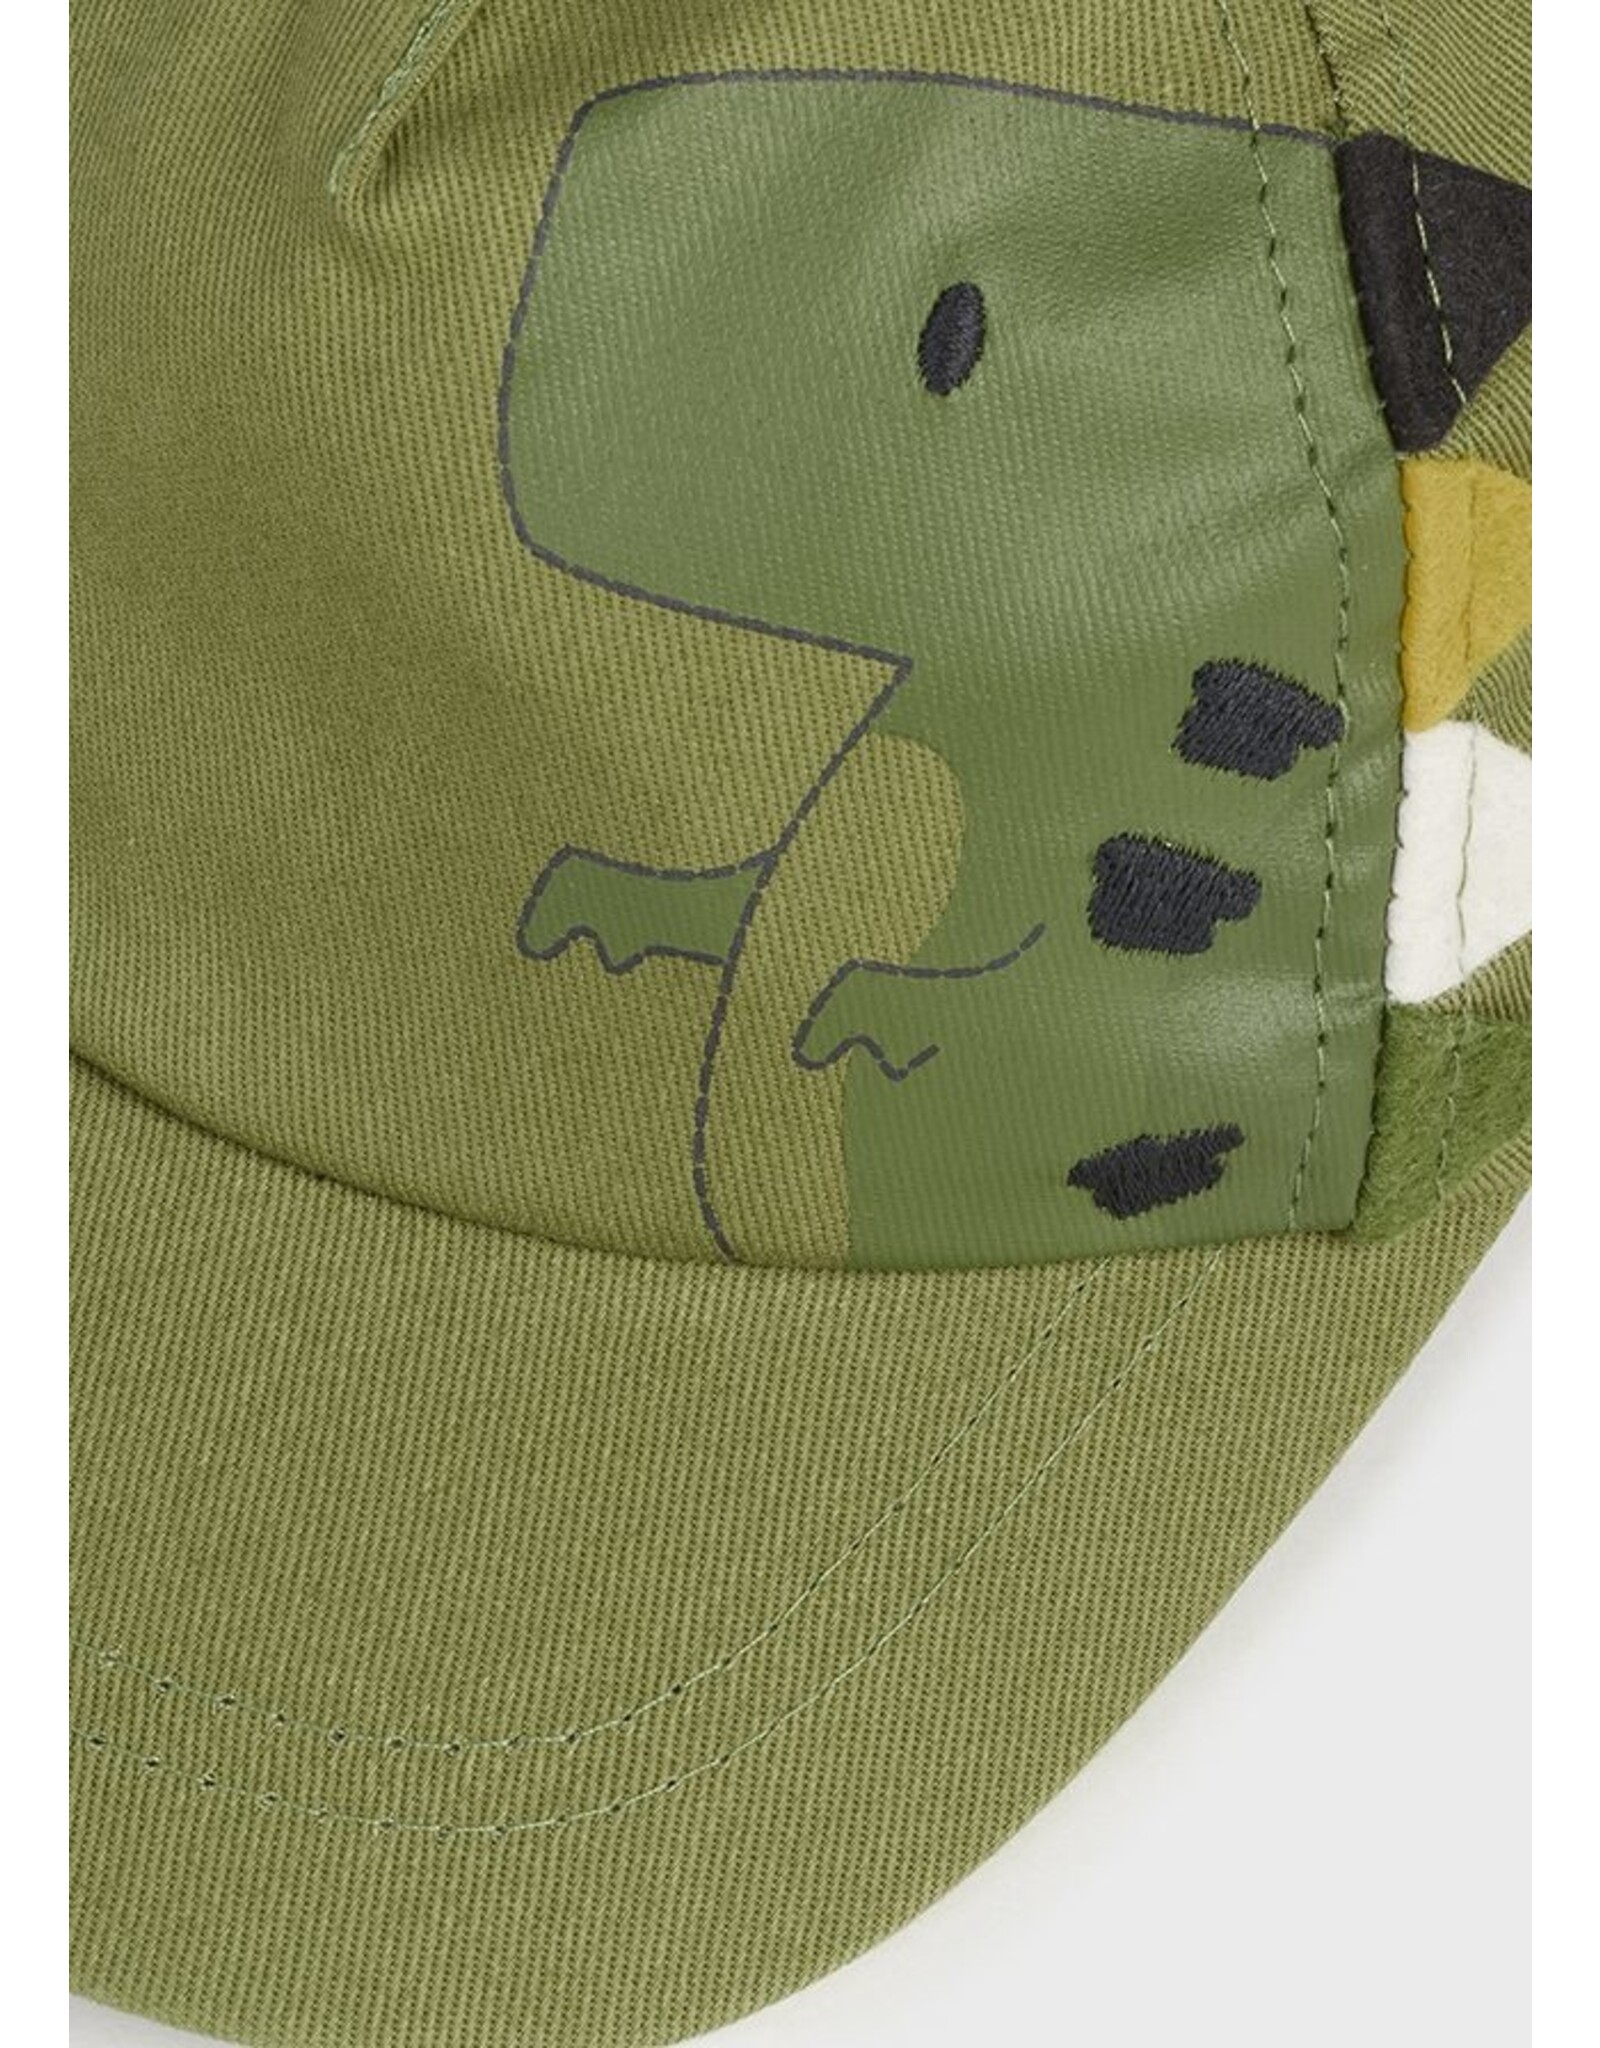 Mayoral Jungle Dino Hat